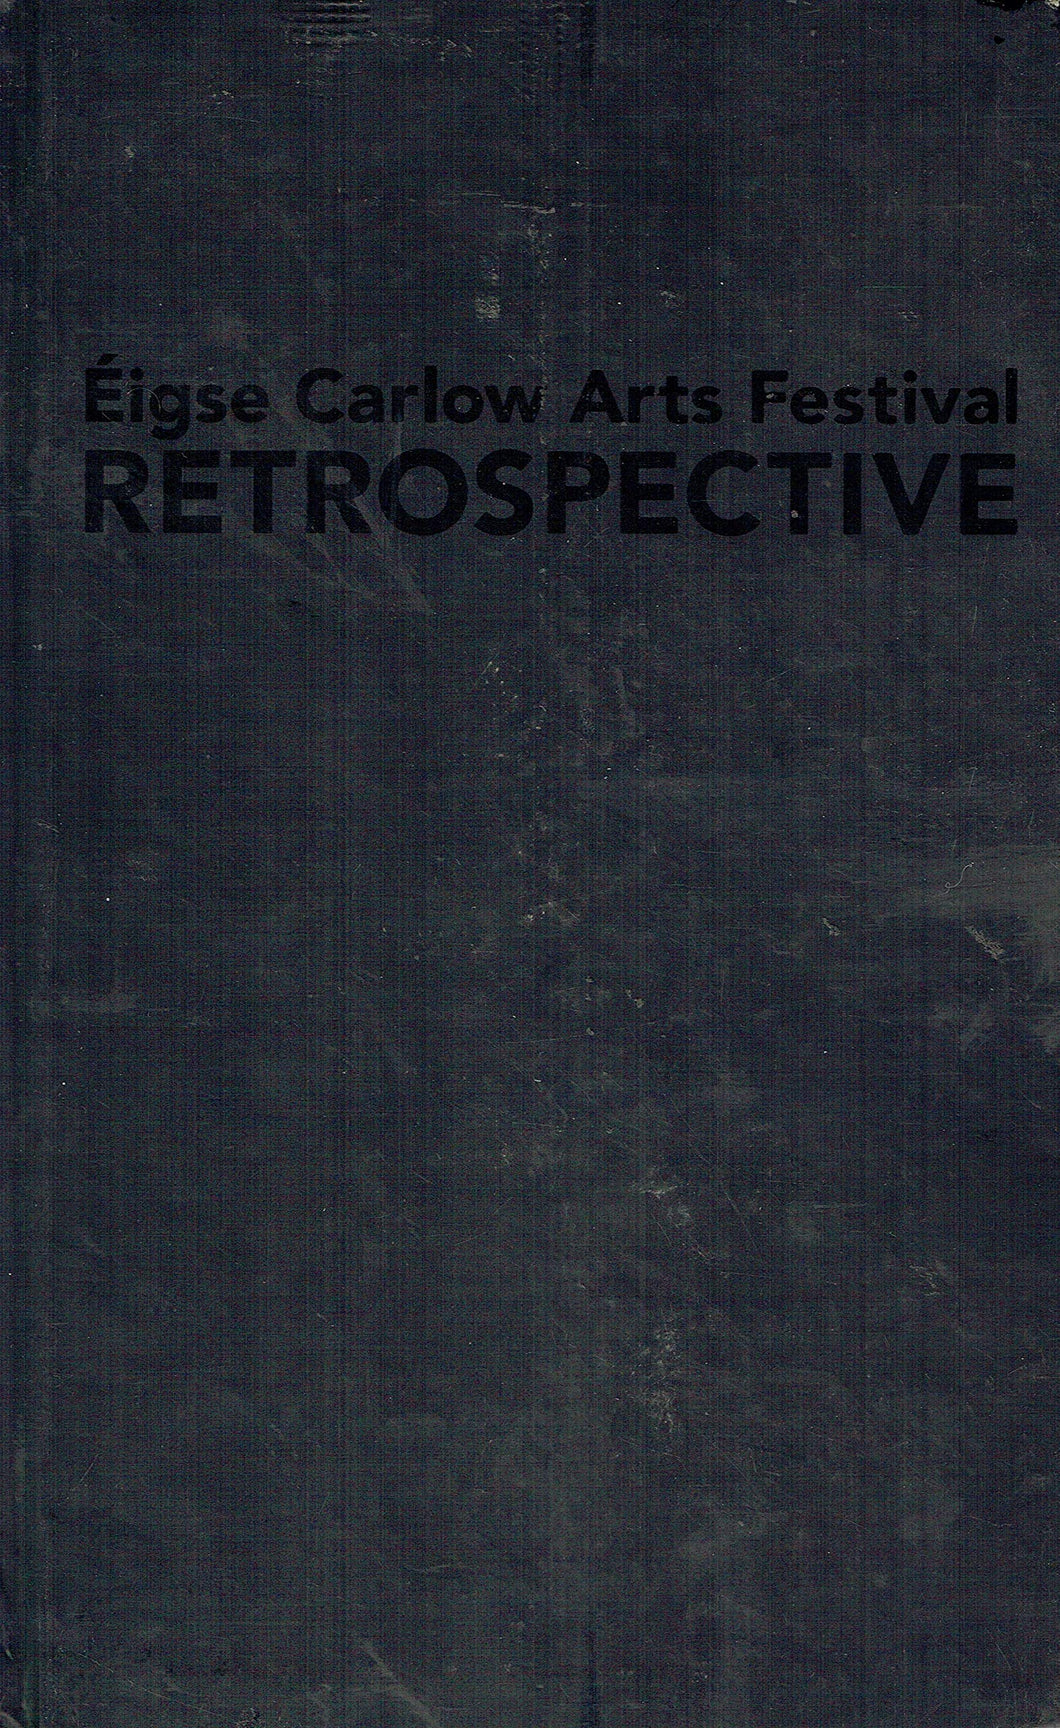 Eigse Carlow Arts Festival Retrospective 2010